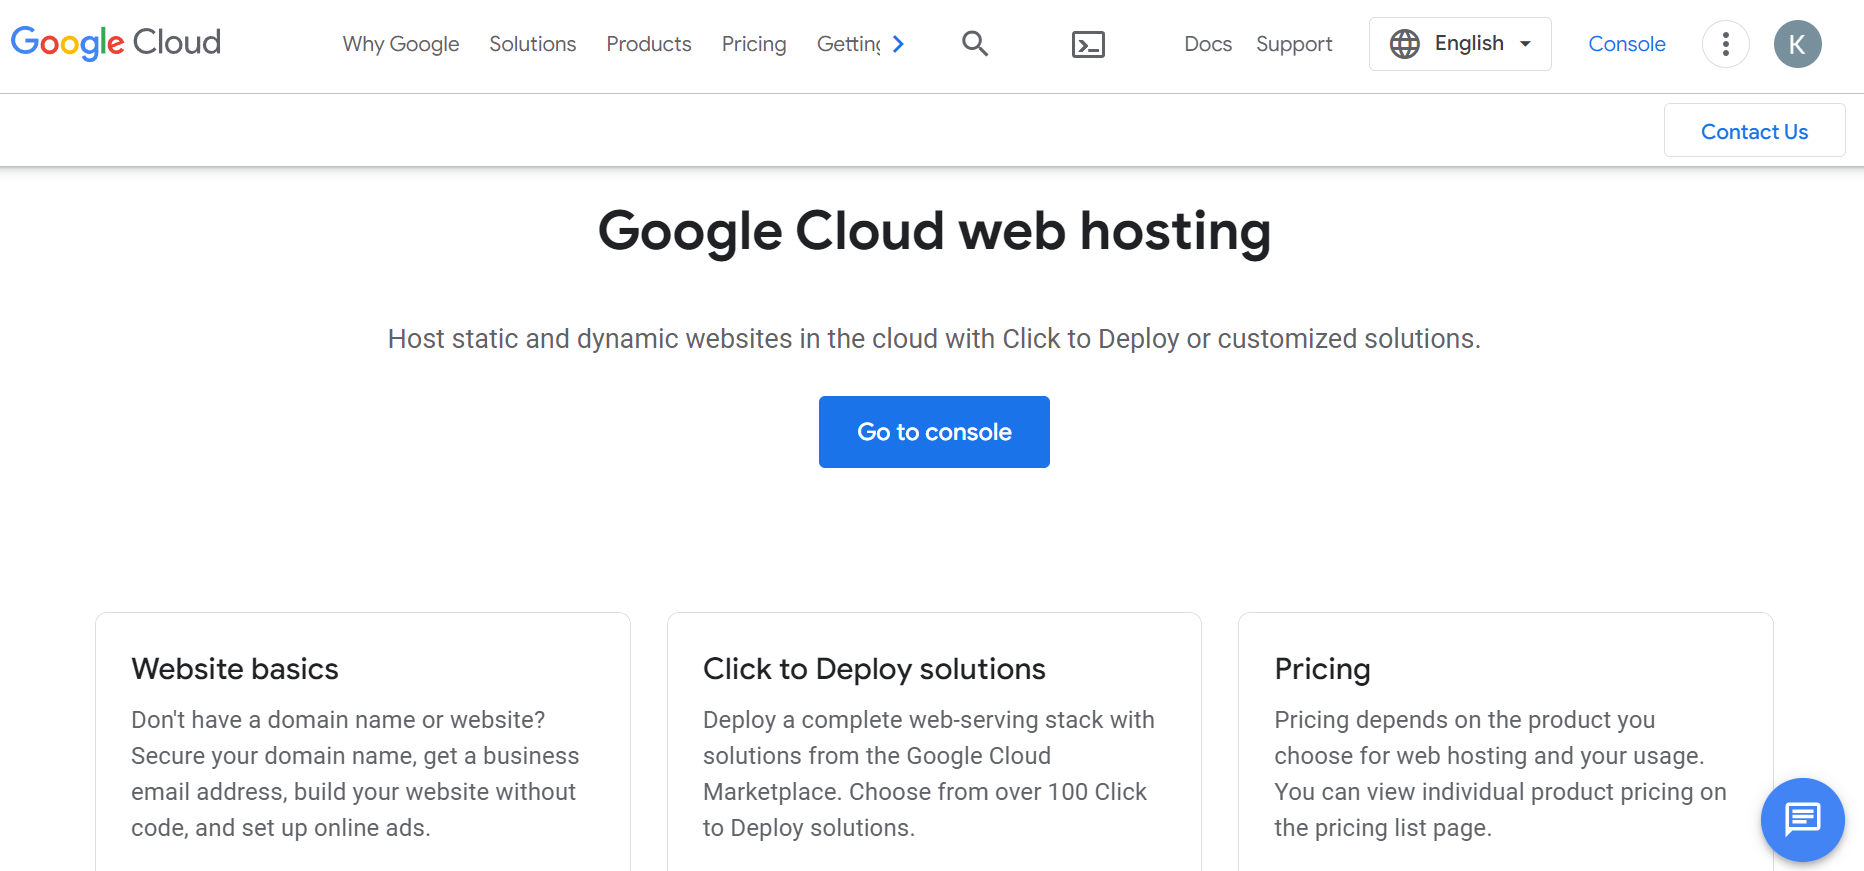 google-cloud-hosting-a-review-for-wordpress-users-1 谷歌雲託管：WordPress 用戶評論